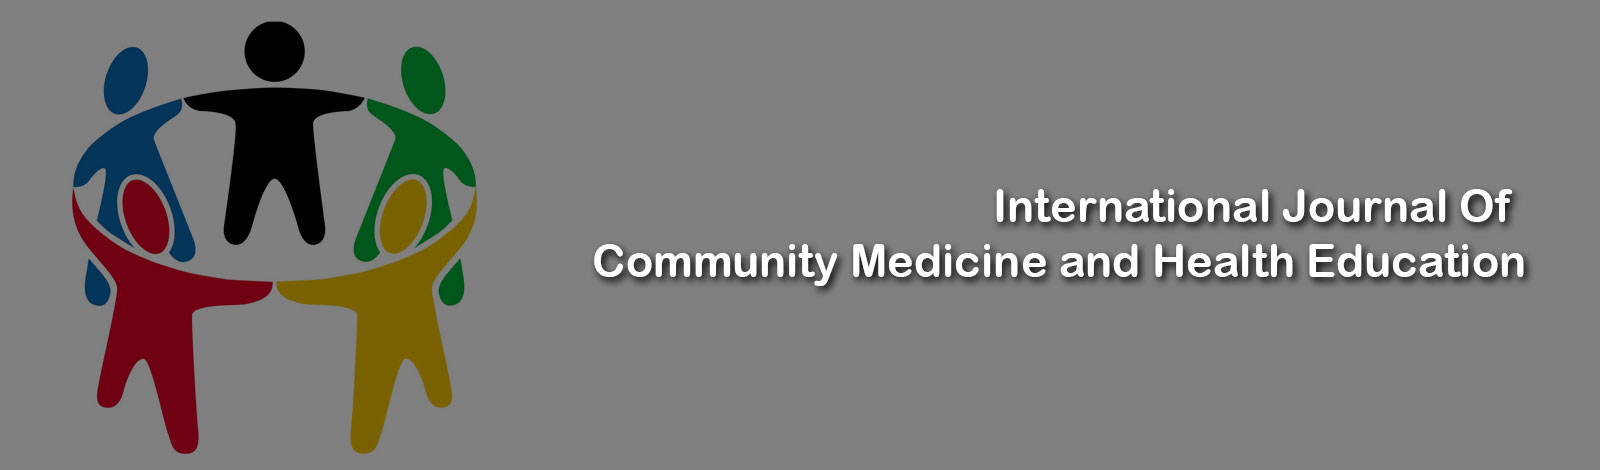 International Journal of Community Medicine and Health Education